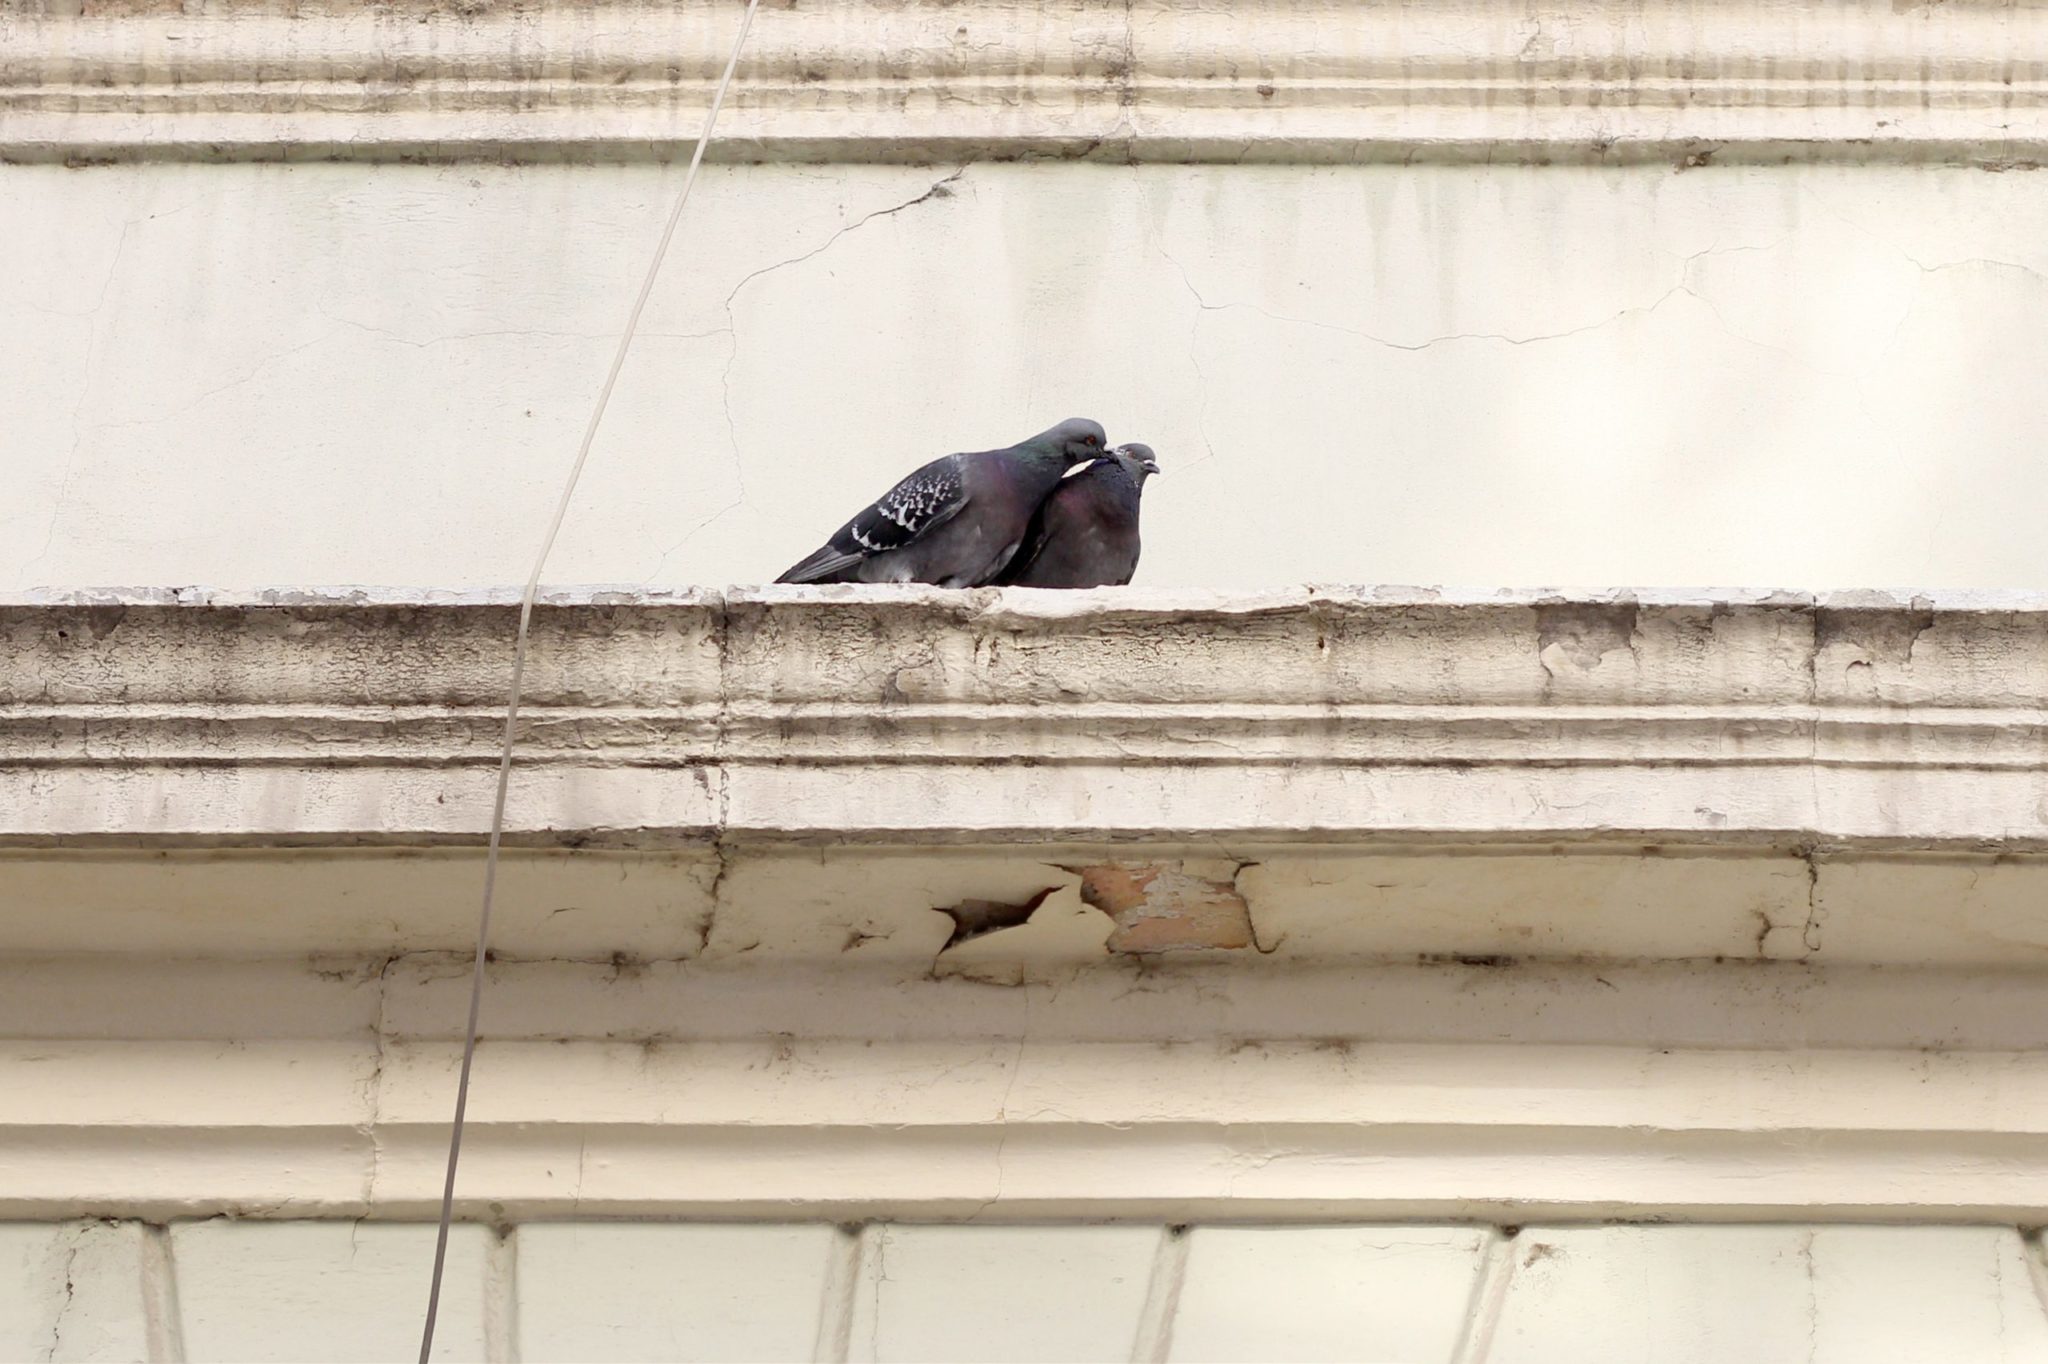 pigeons-love-on-the-edge-of-the-building-2021-08-30-09-21-02-utc